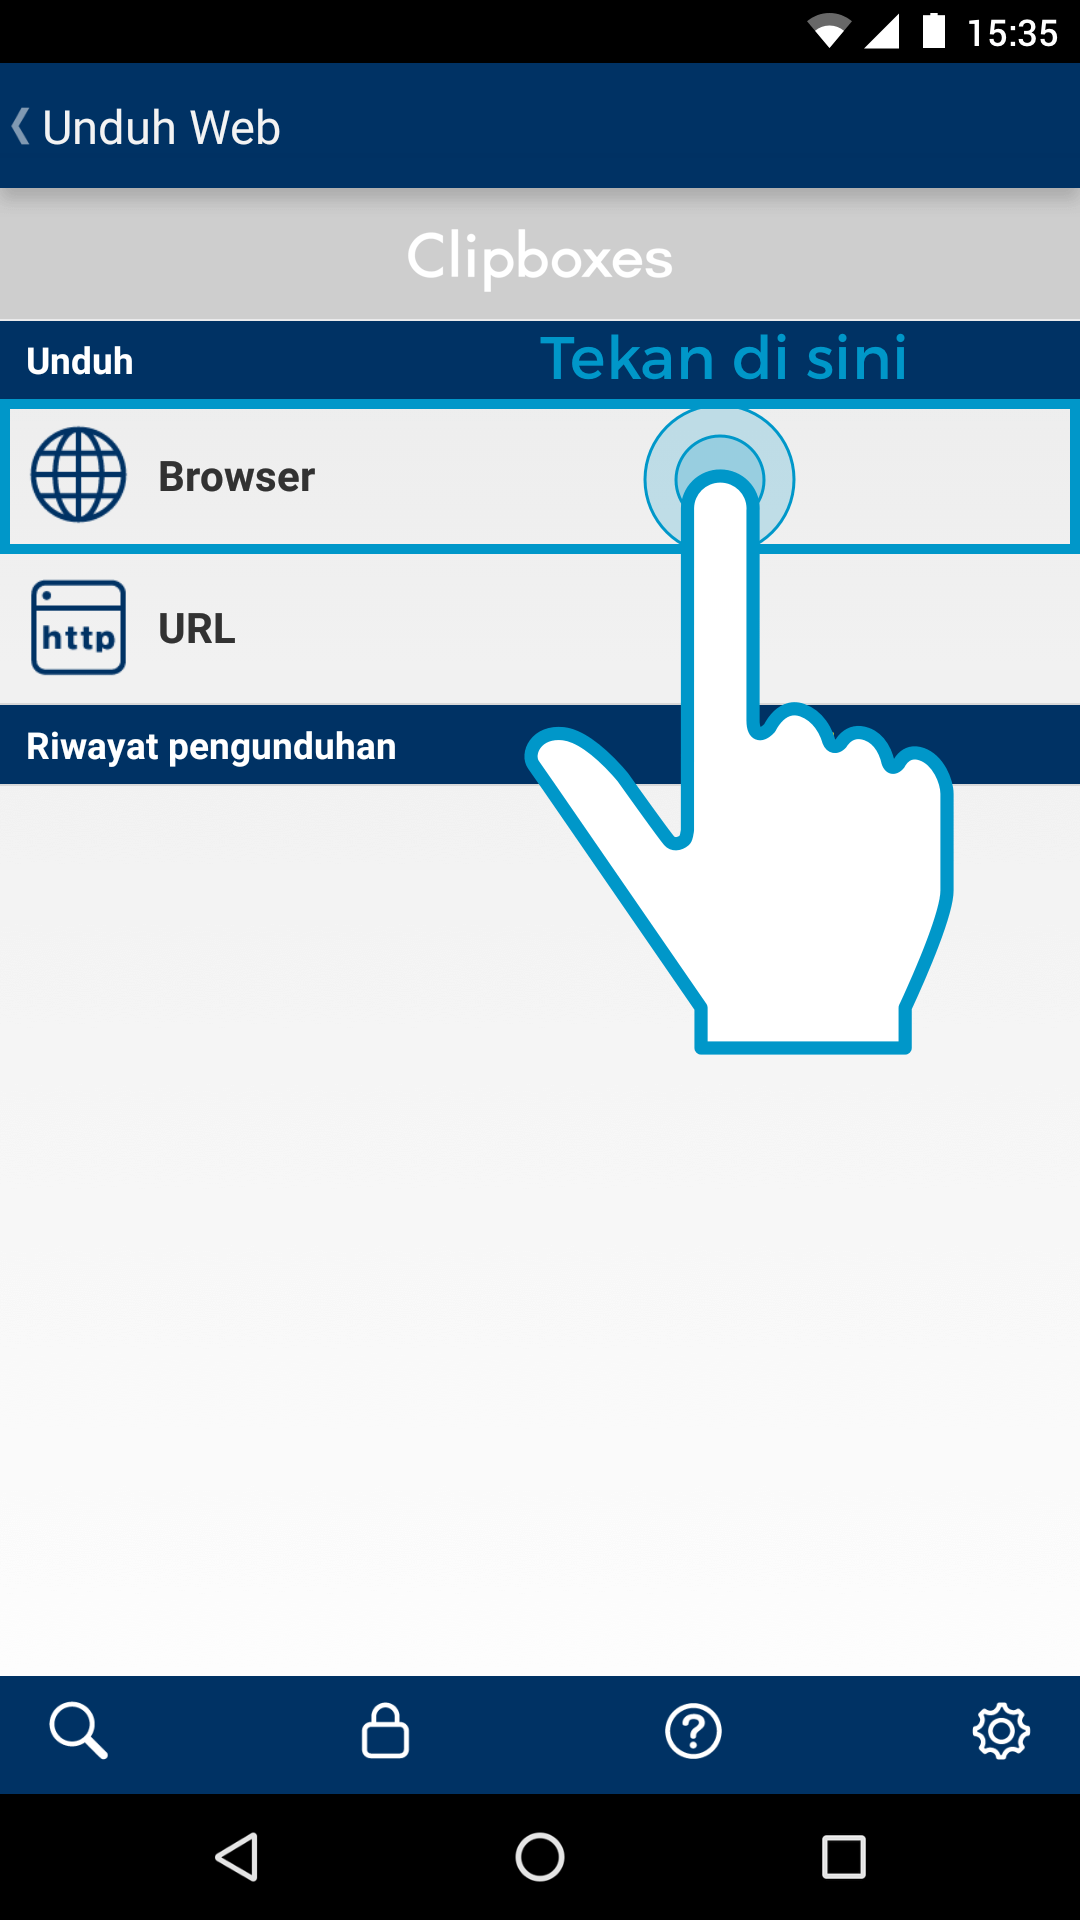 tap 'Browser'.